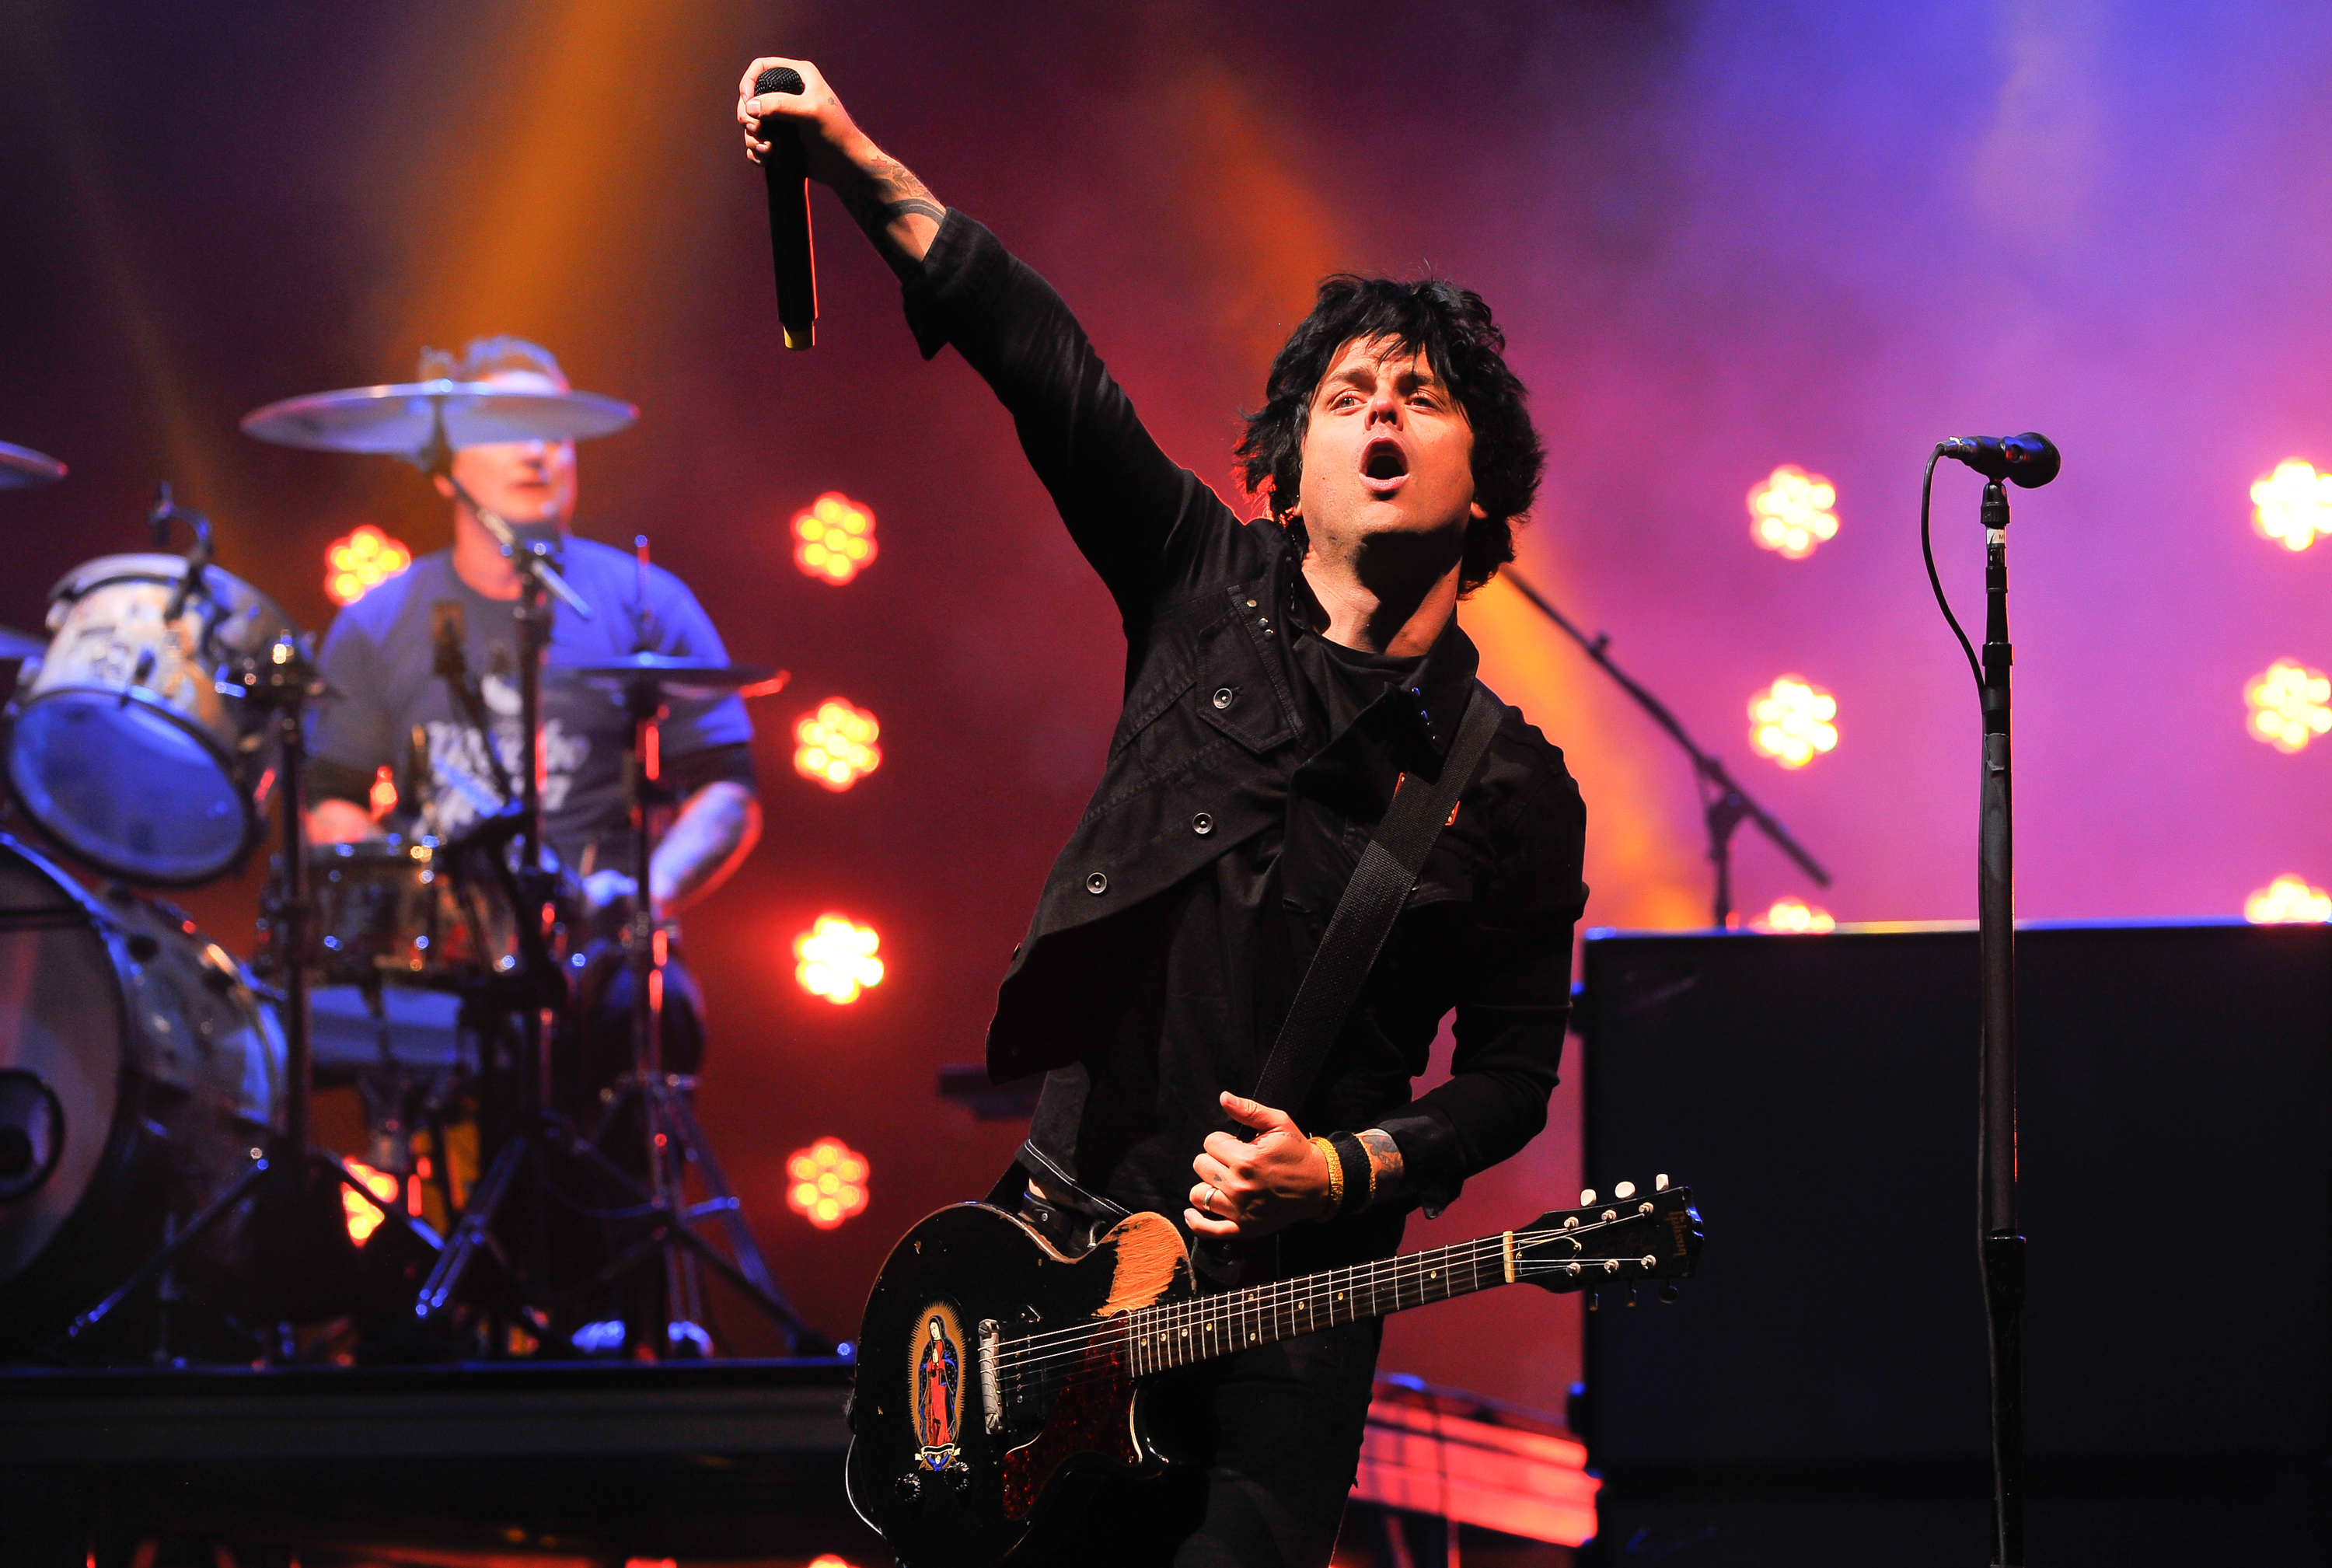 Green Day Unveil Latest 'Saviors' Track 'One Eyed Bastard'